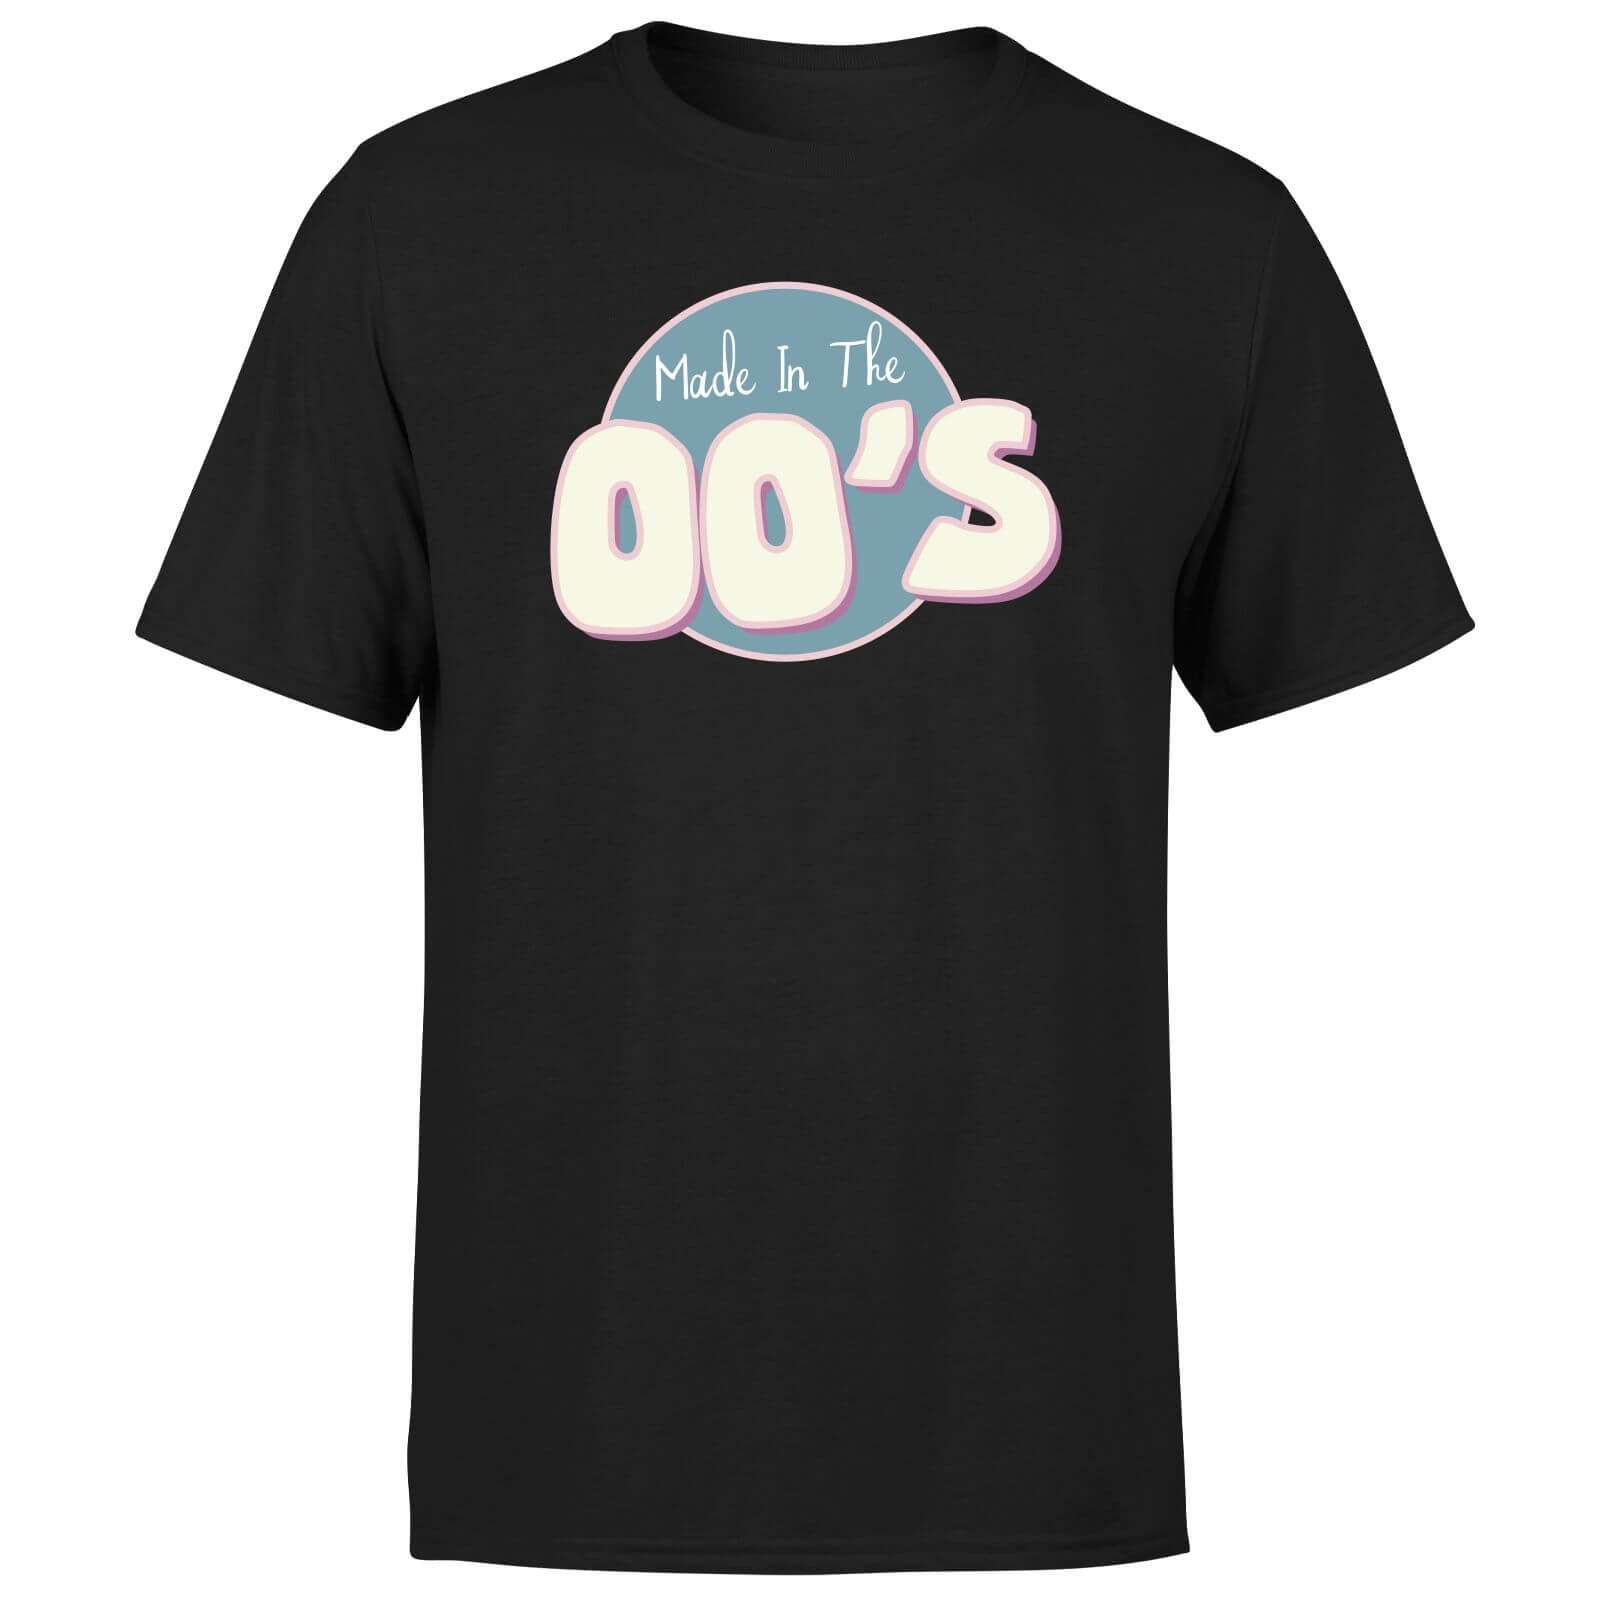 Made In The 00s Birthday Men's T-Shirt - Black - XS - Black